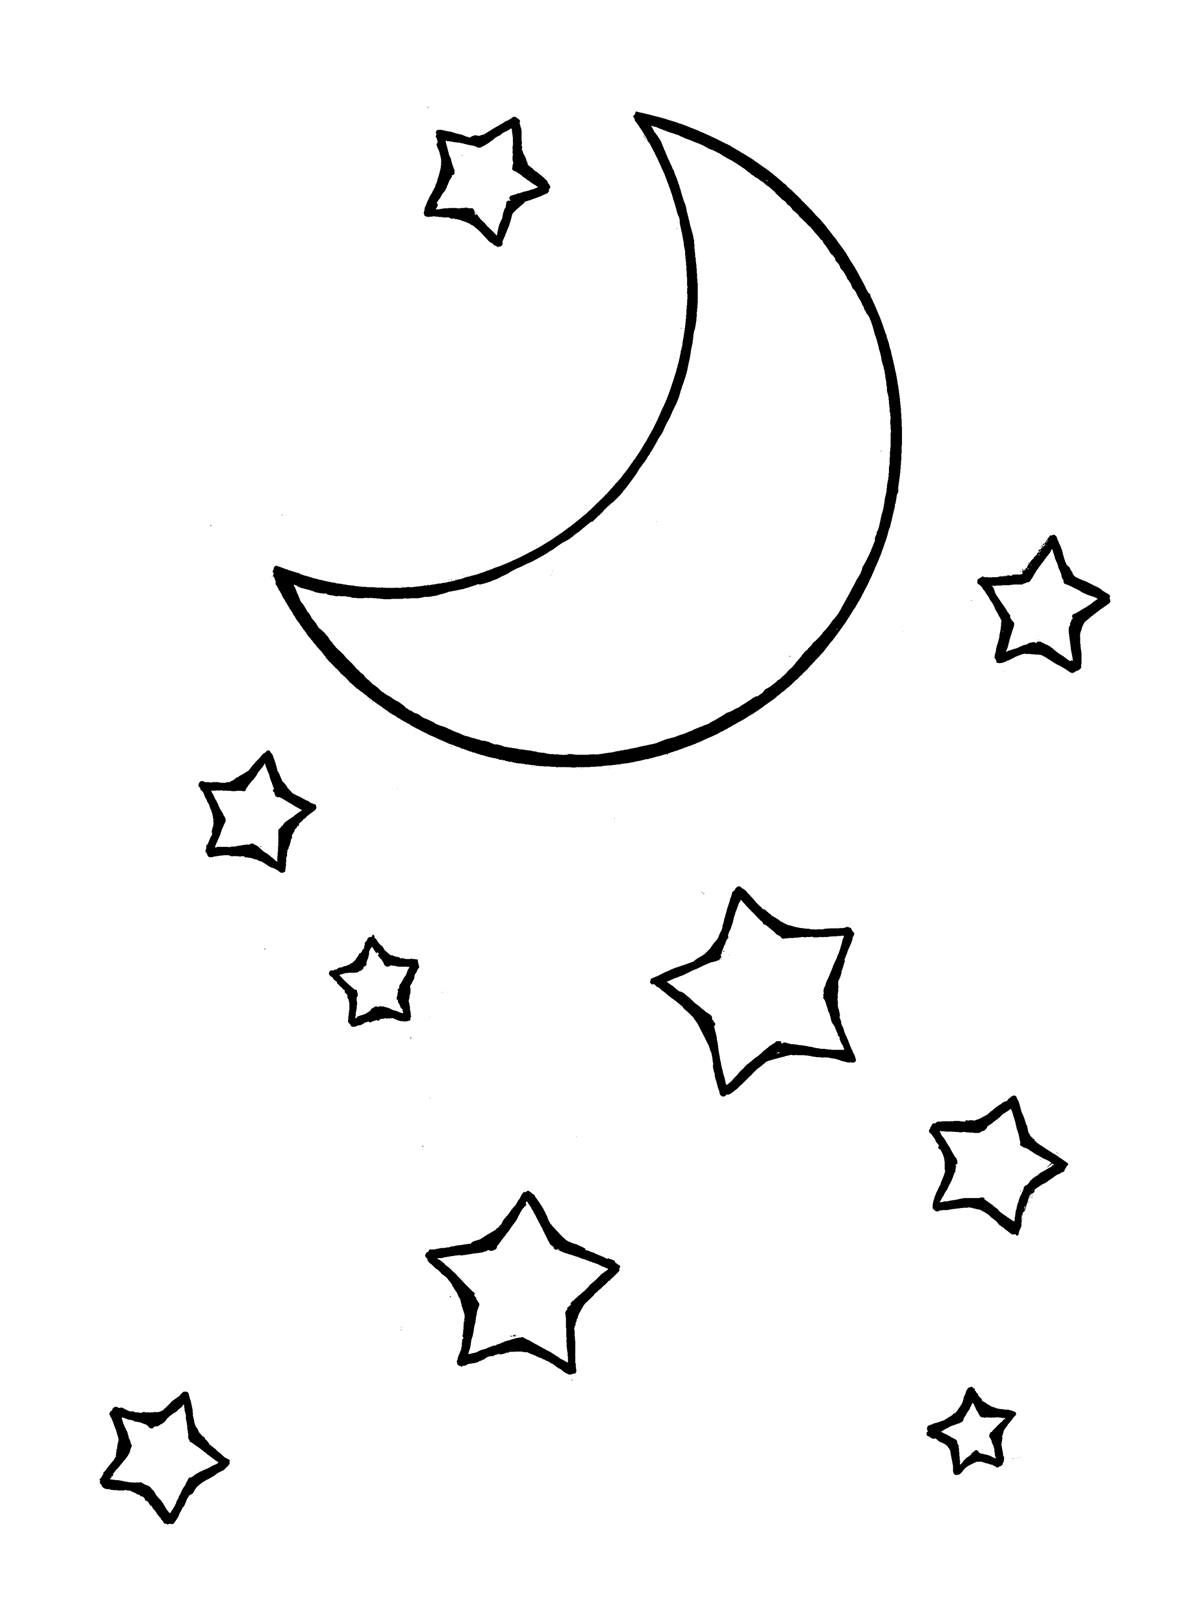 Moon and Stars